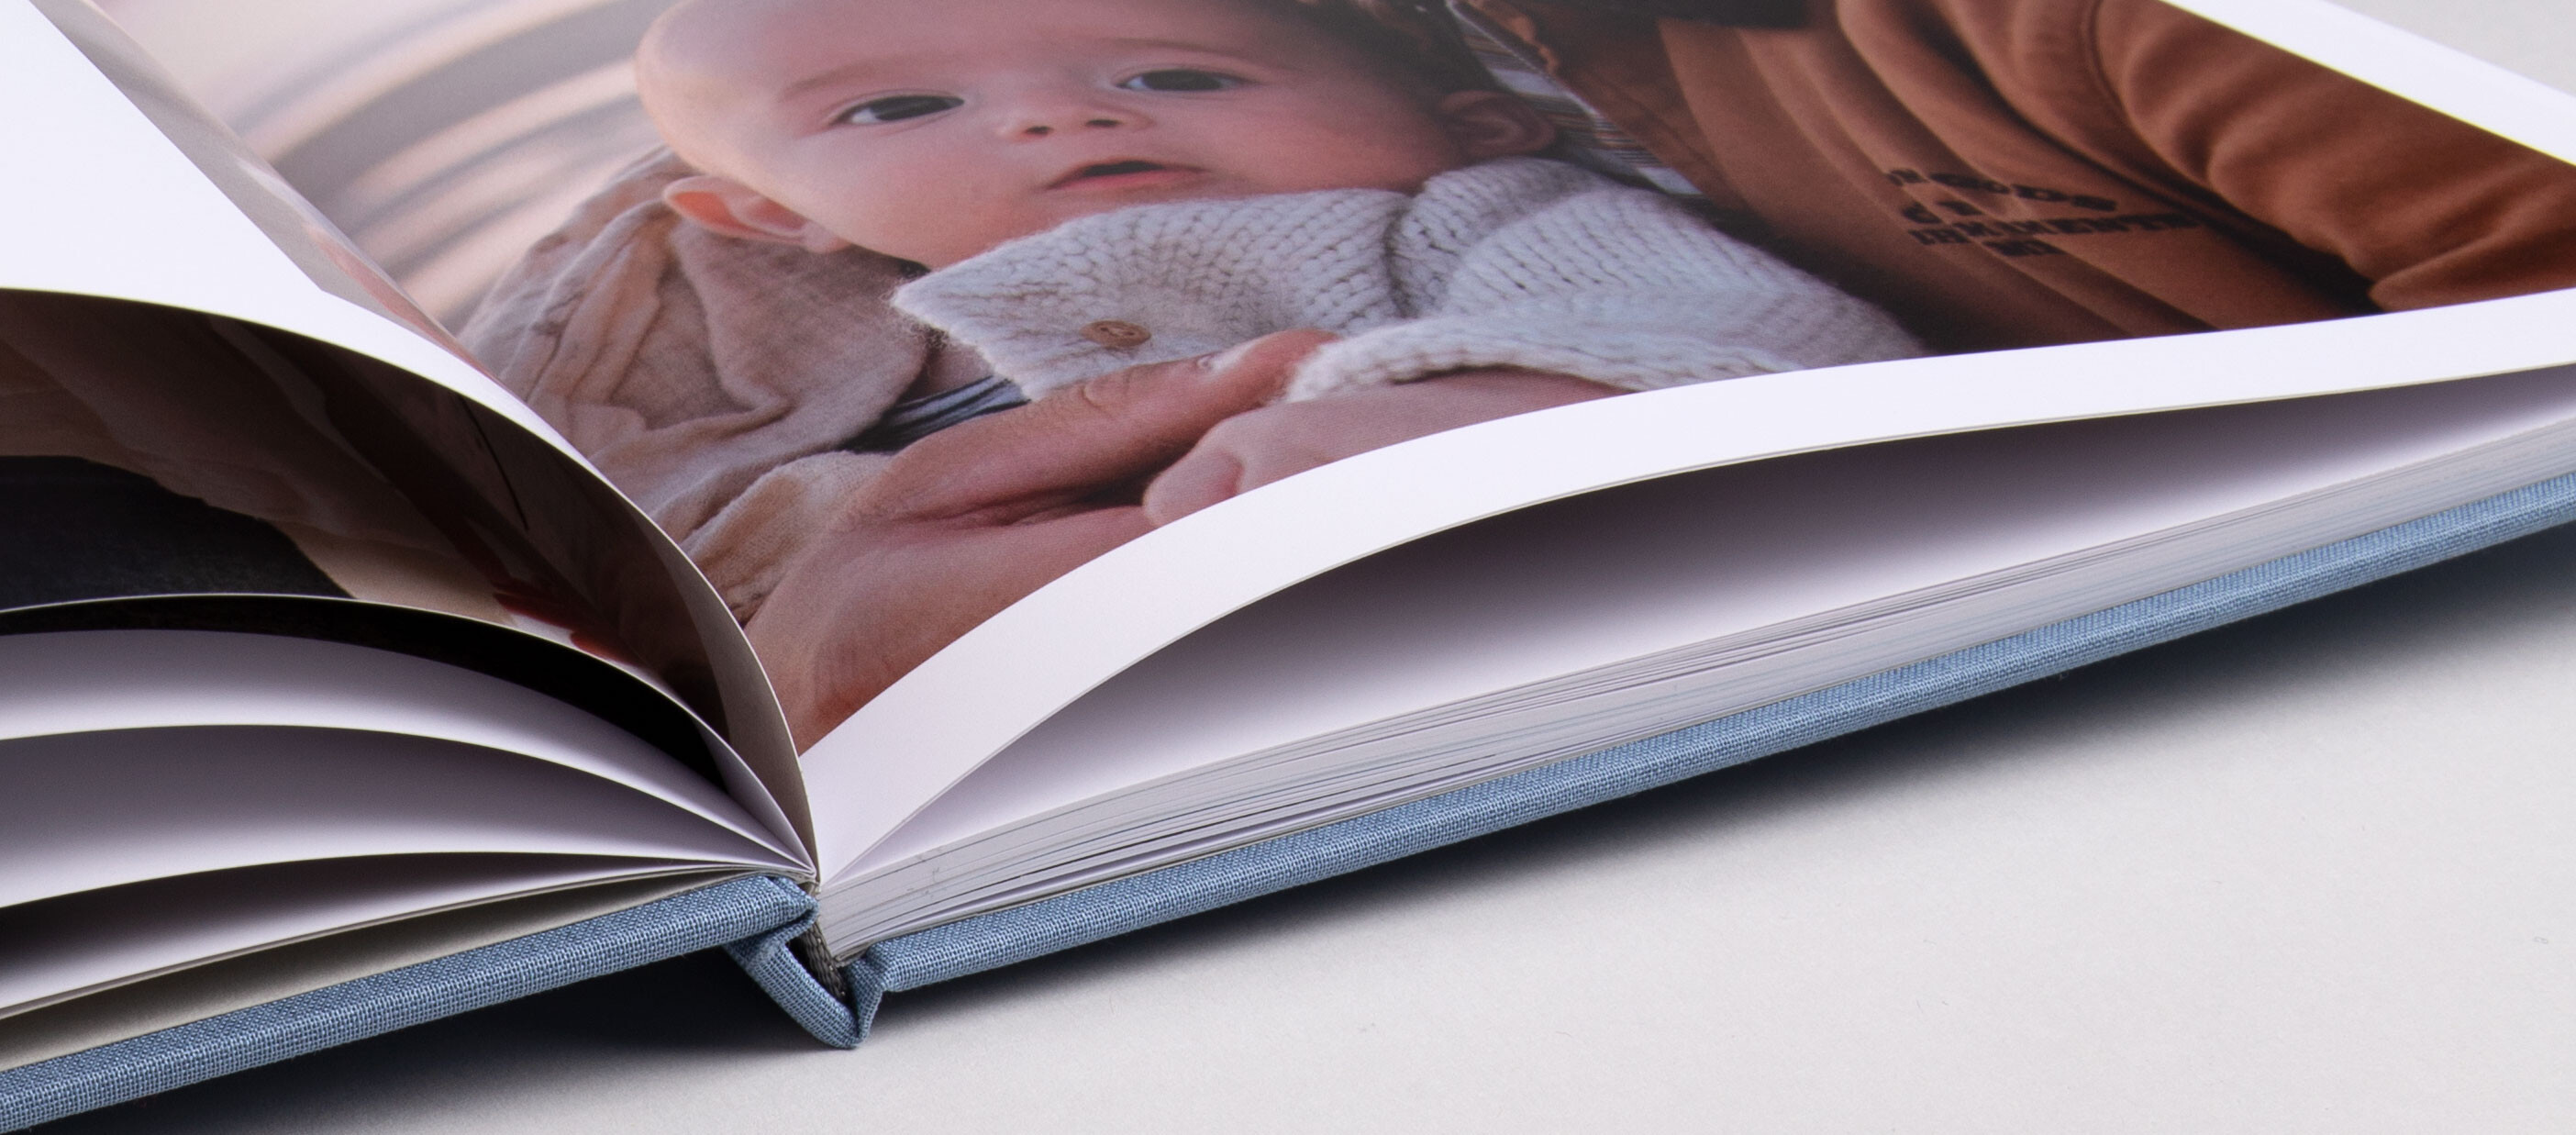 Create a hardcover photo book